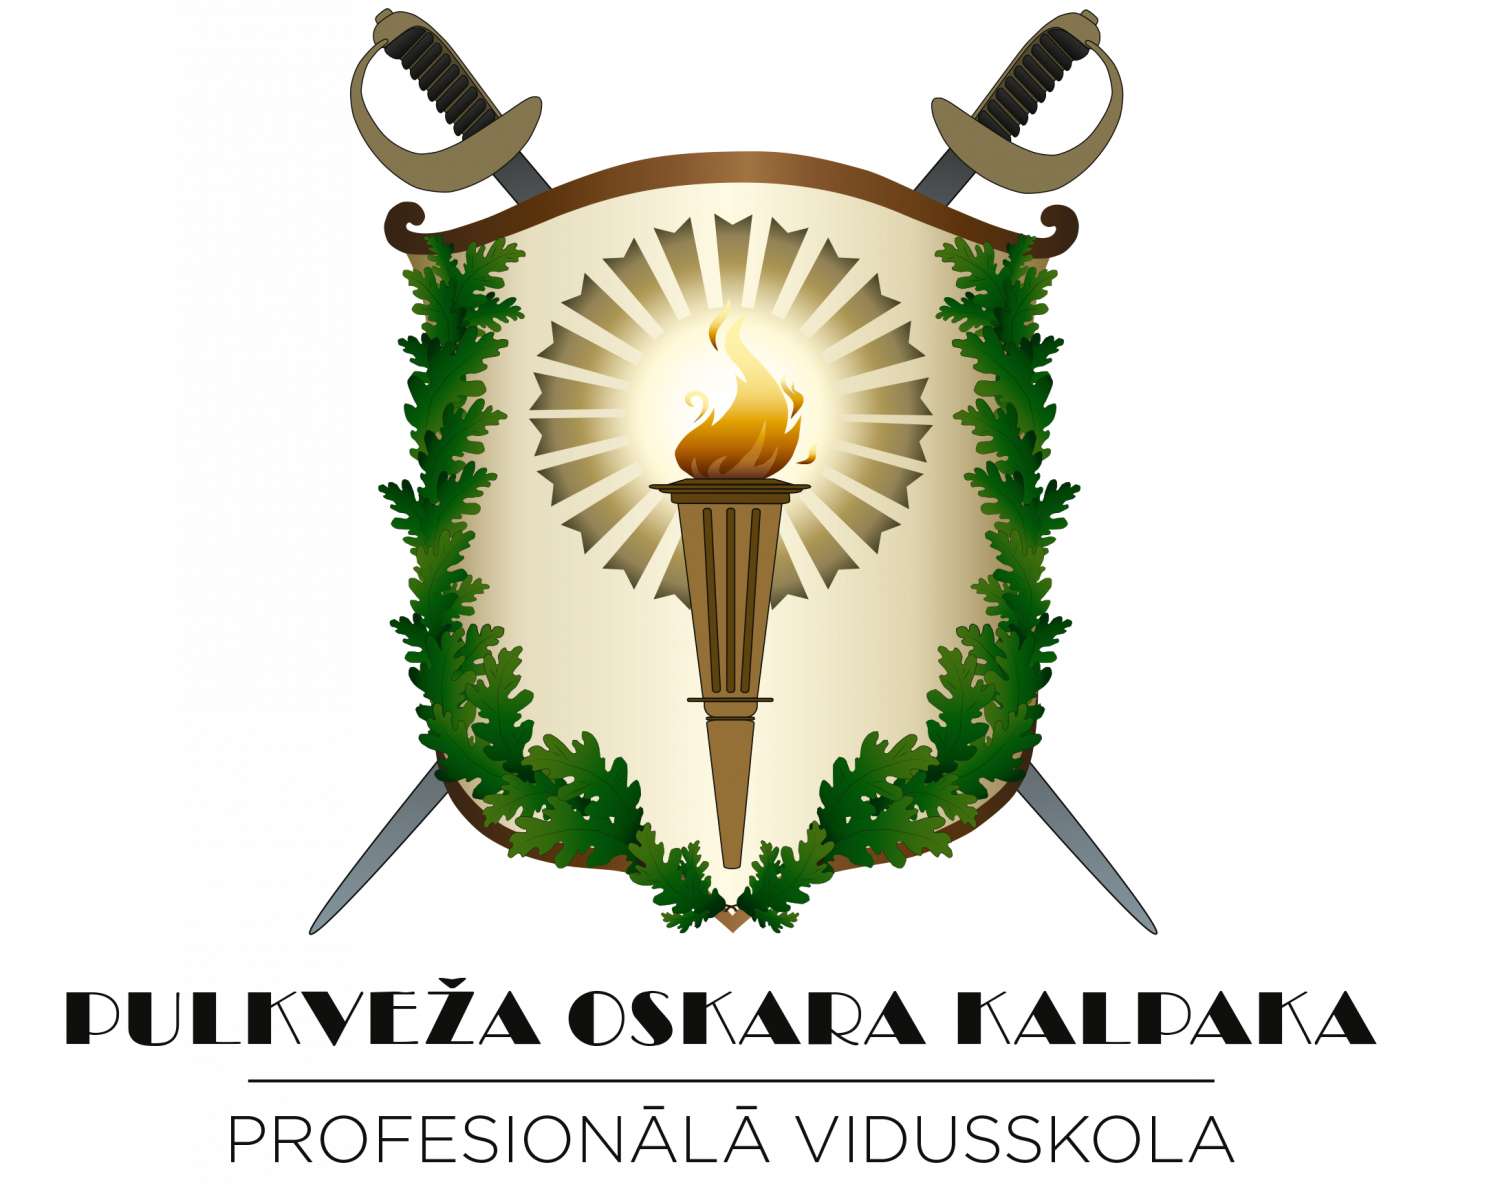 Pulkveža Oskara Kalpaka profesionālās vidusskolas logo